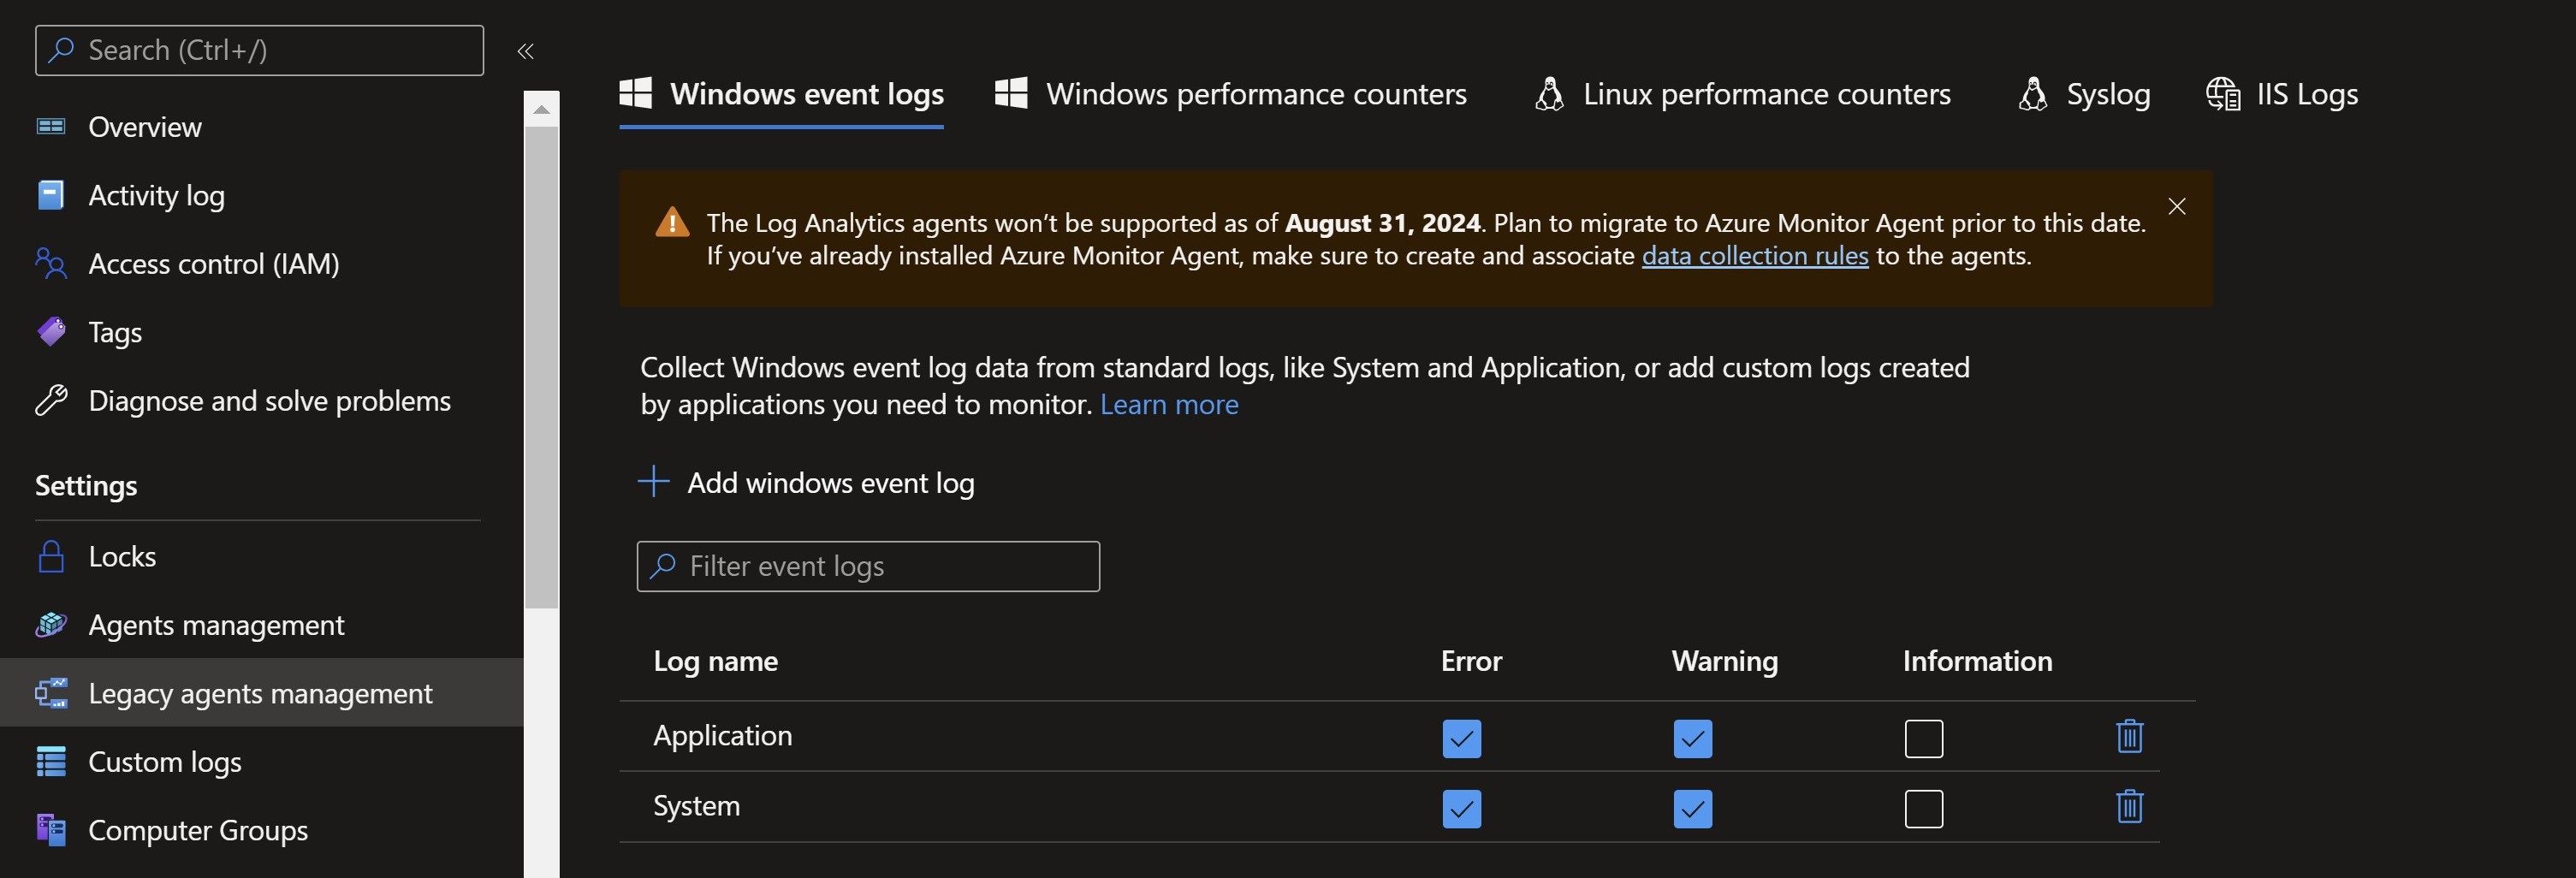 Screenshot showing the Windows event log settings